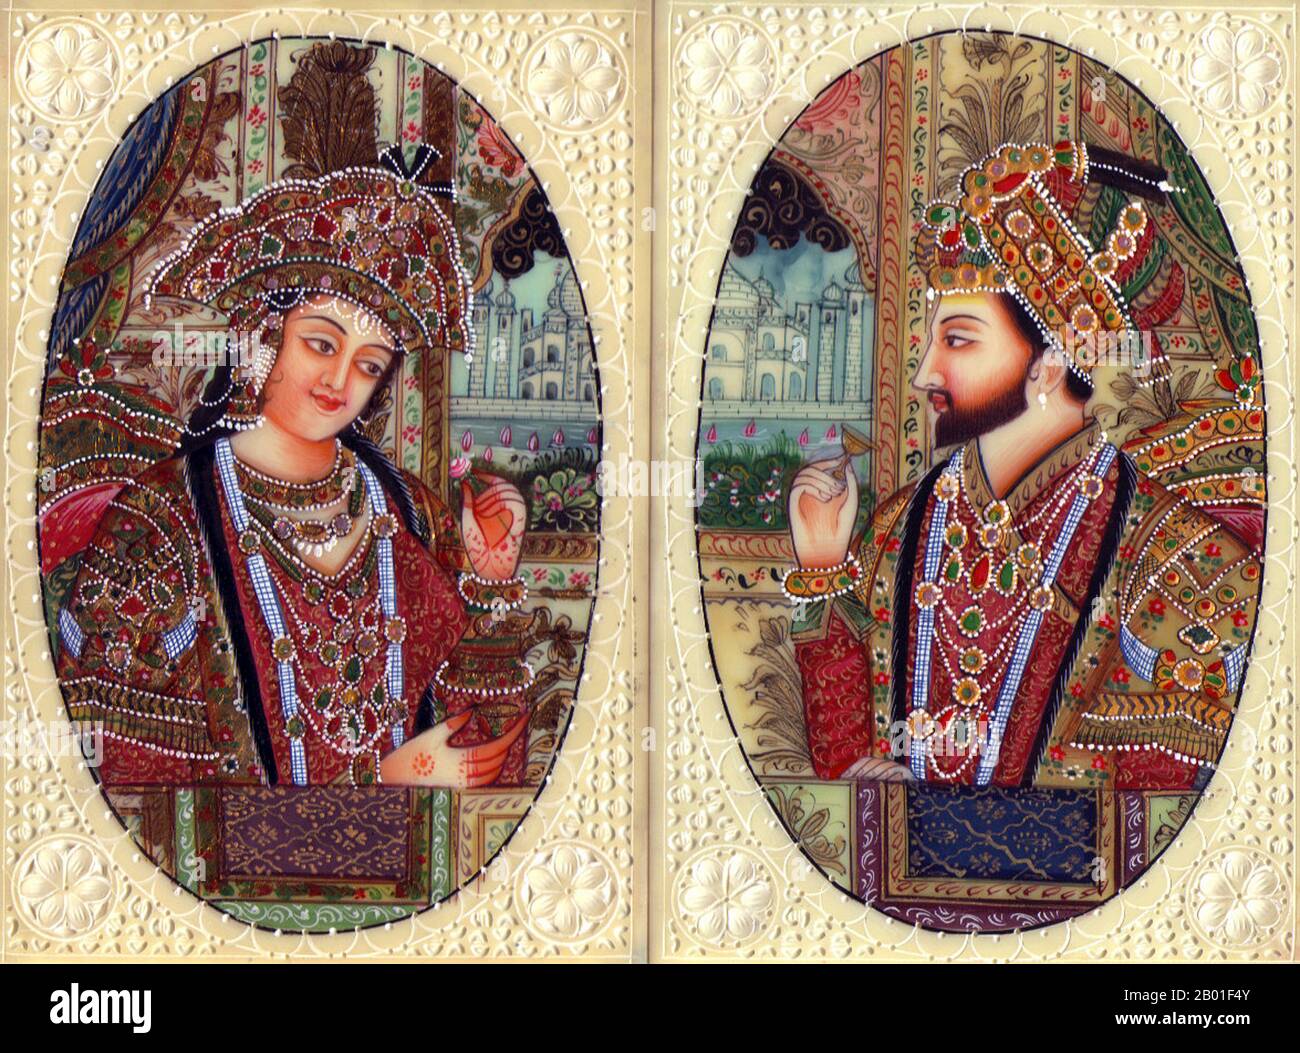 Shah jahan and mumtaz mahal hi-res stock photography and images ...